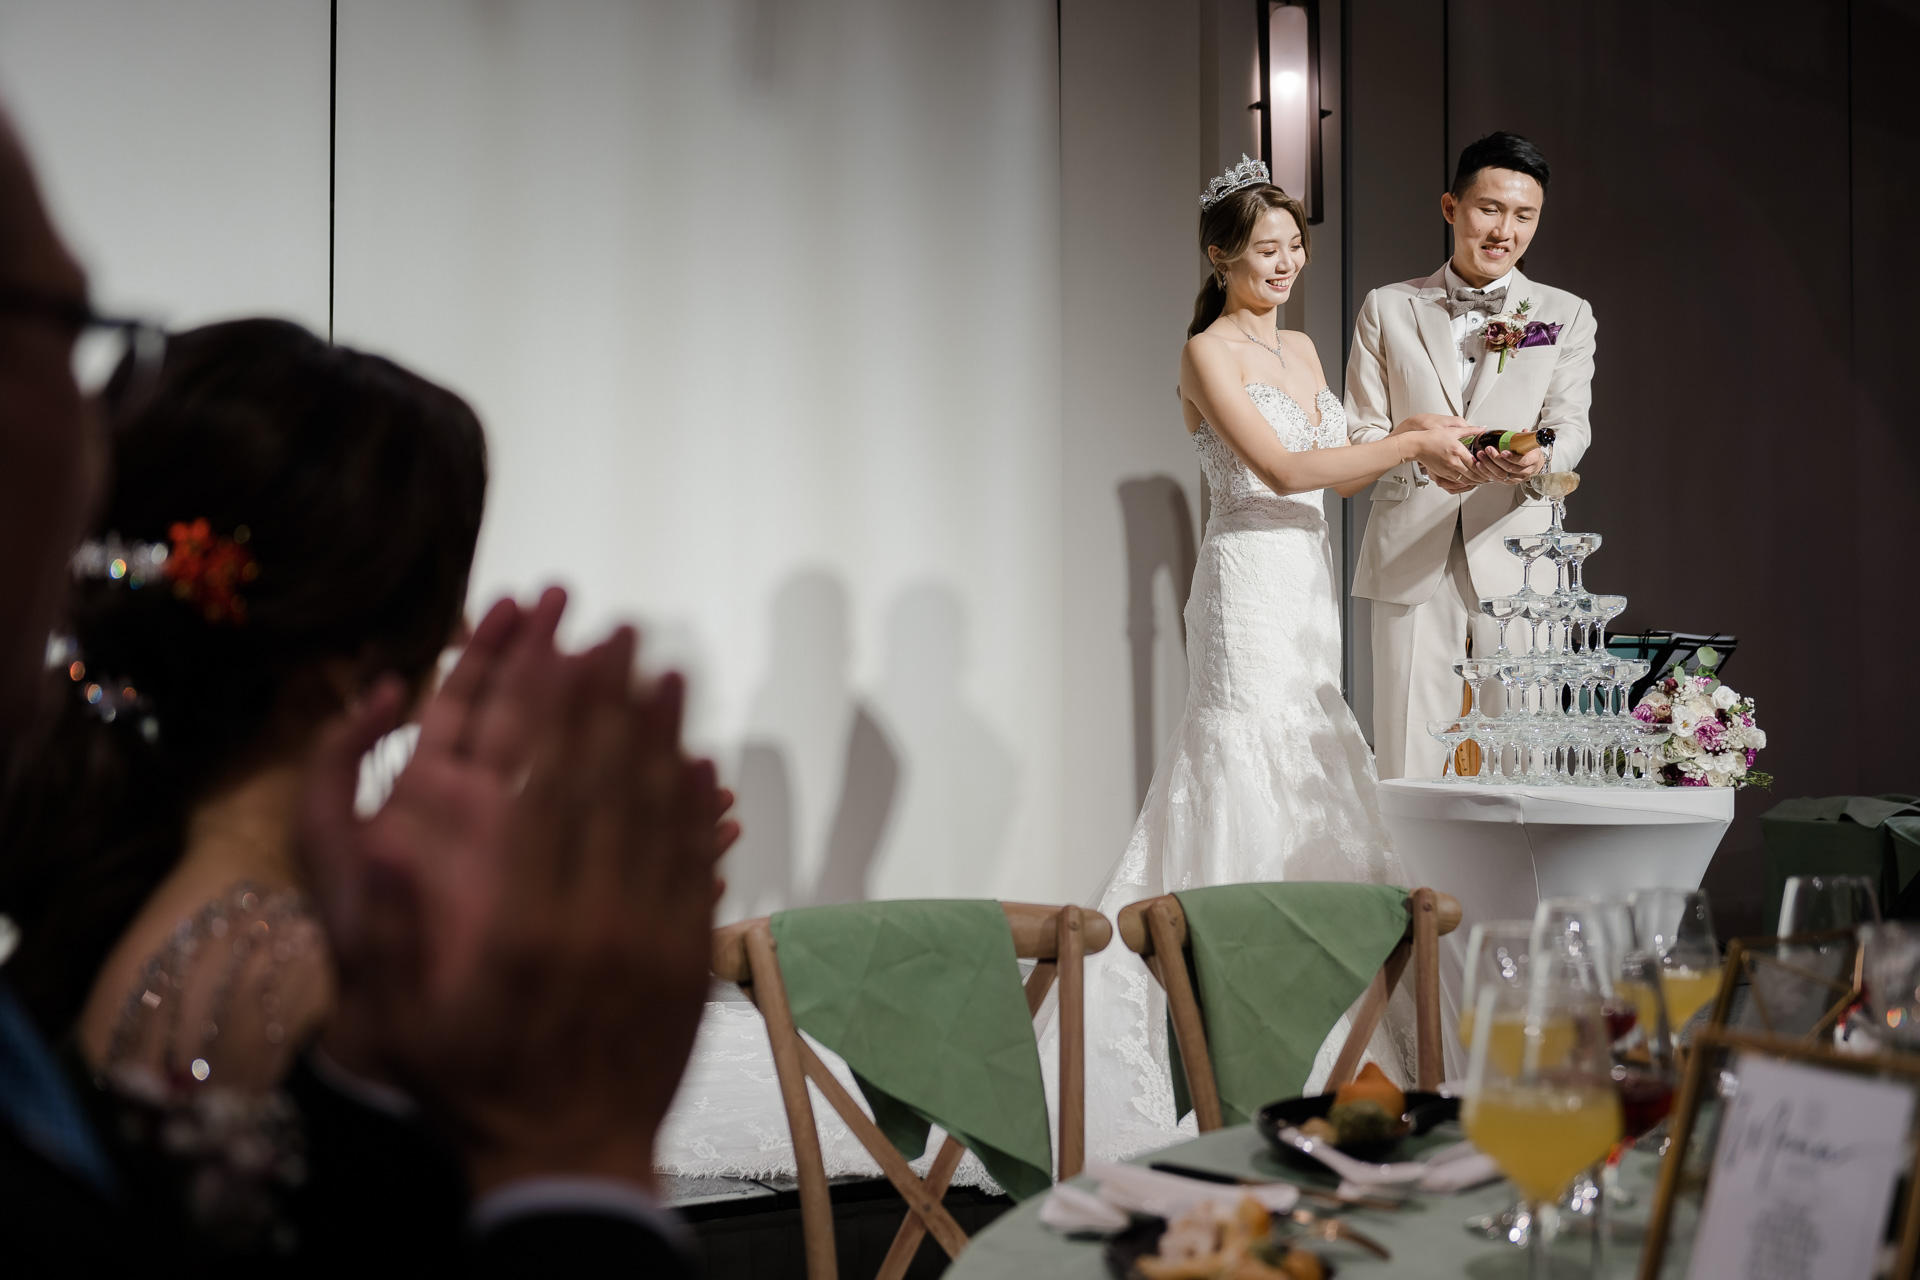 SJwedding鯊魚婚紗婚攝團隊艾迪在台中蘭克斯特拍攝的婚禮紀錄